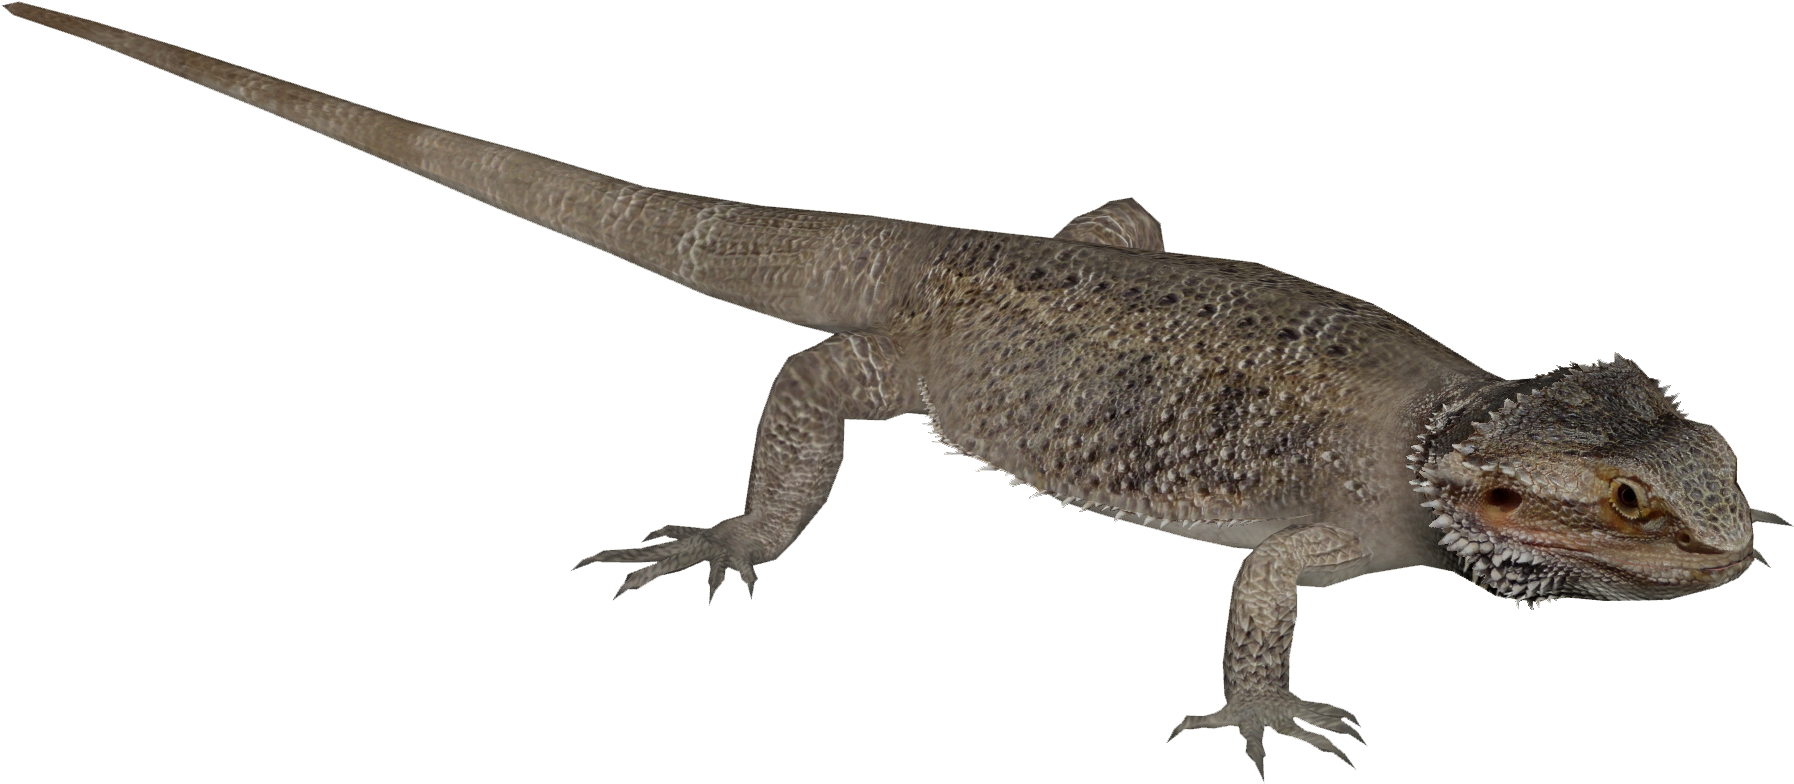 Bearded Dragon Lizard PNG High-Quality Image